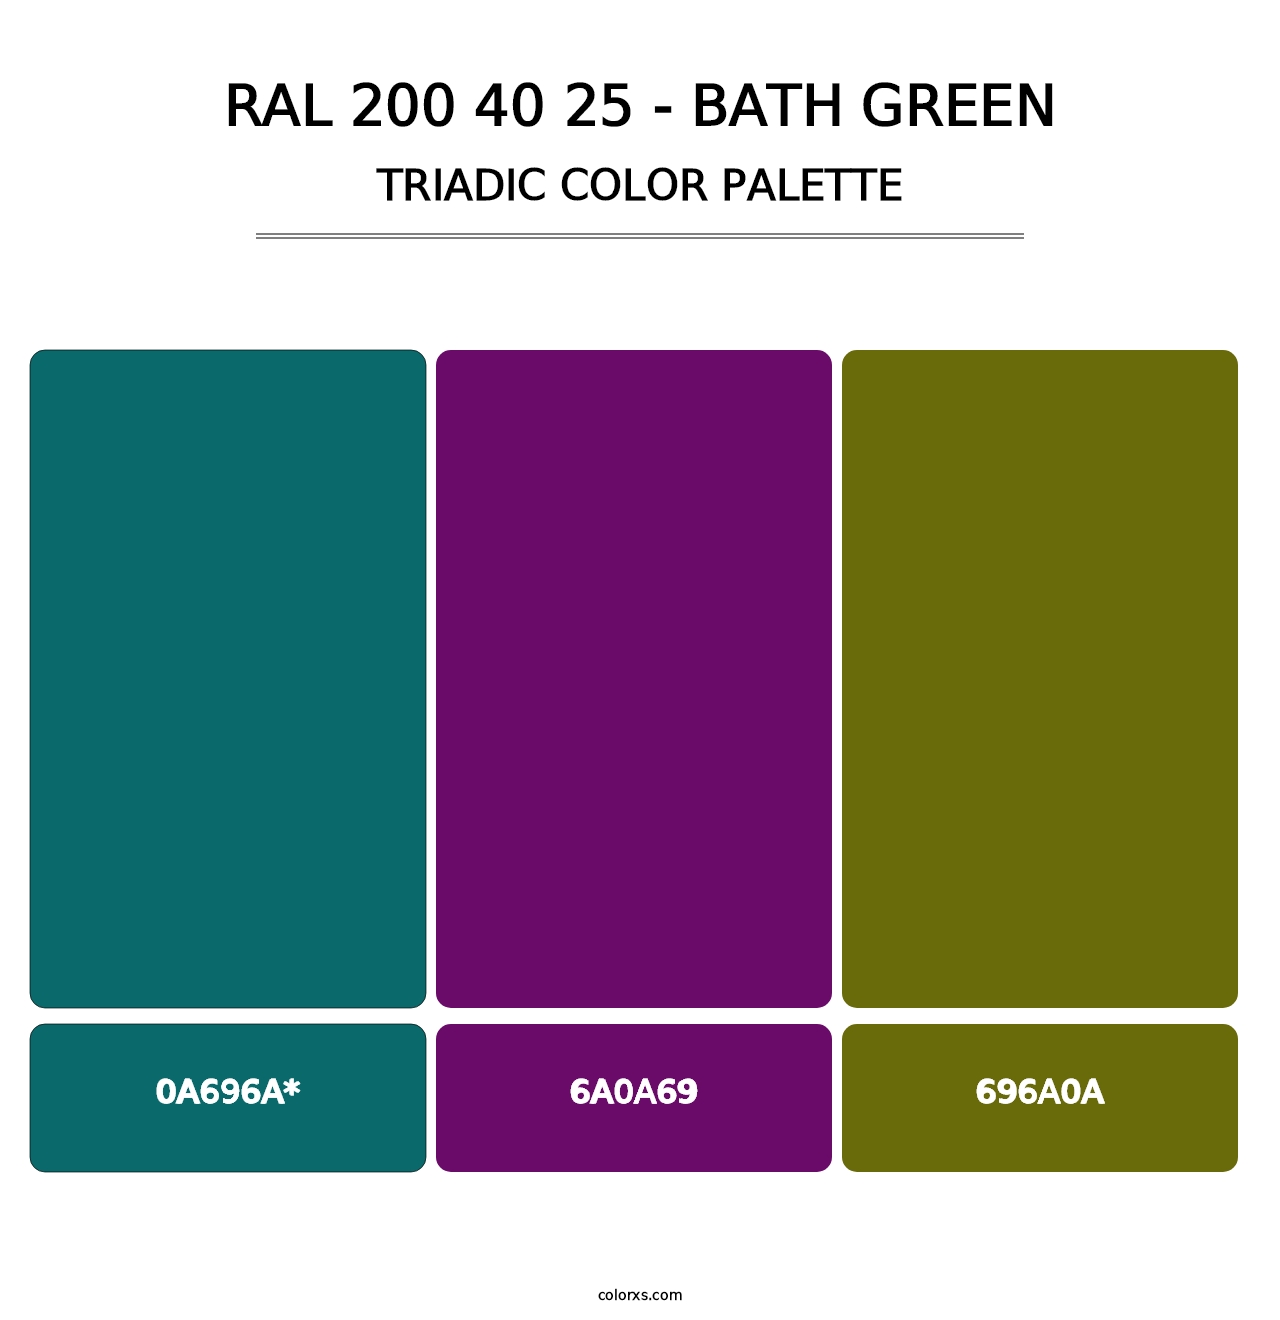 RAL 200 40 25 - Bath Green - Triadic Color Palette